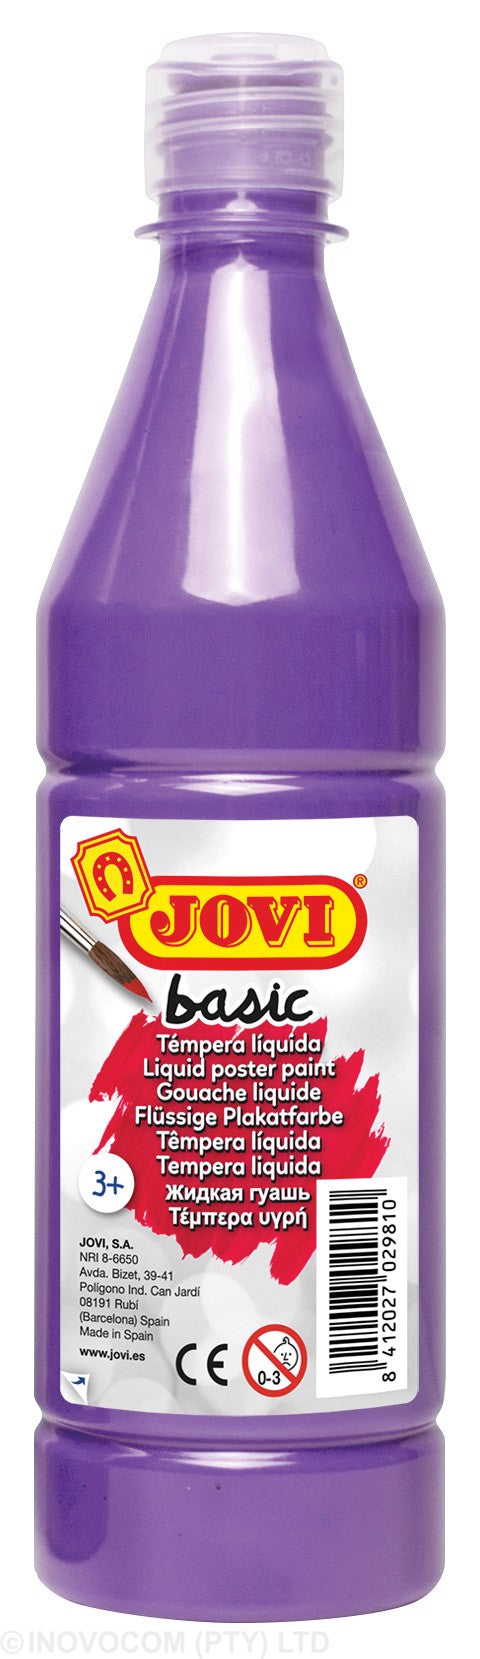 Jovi Basic Liquid Poster Paint Bottle 500ml Violet